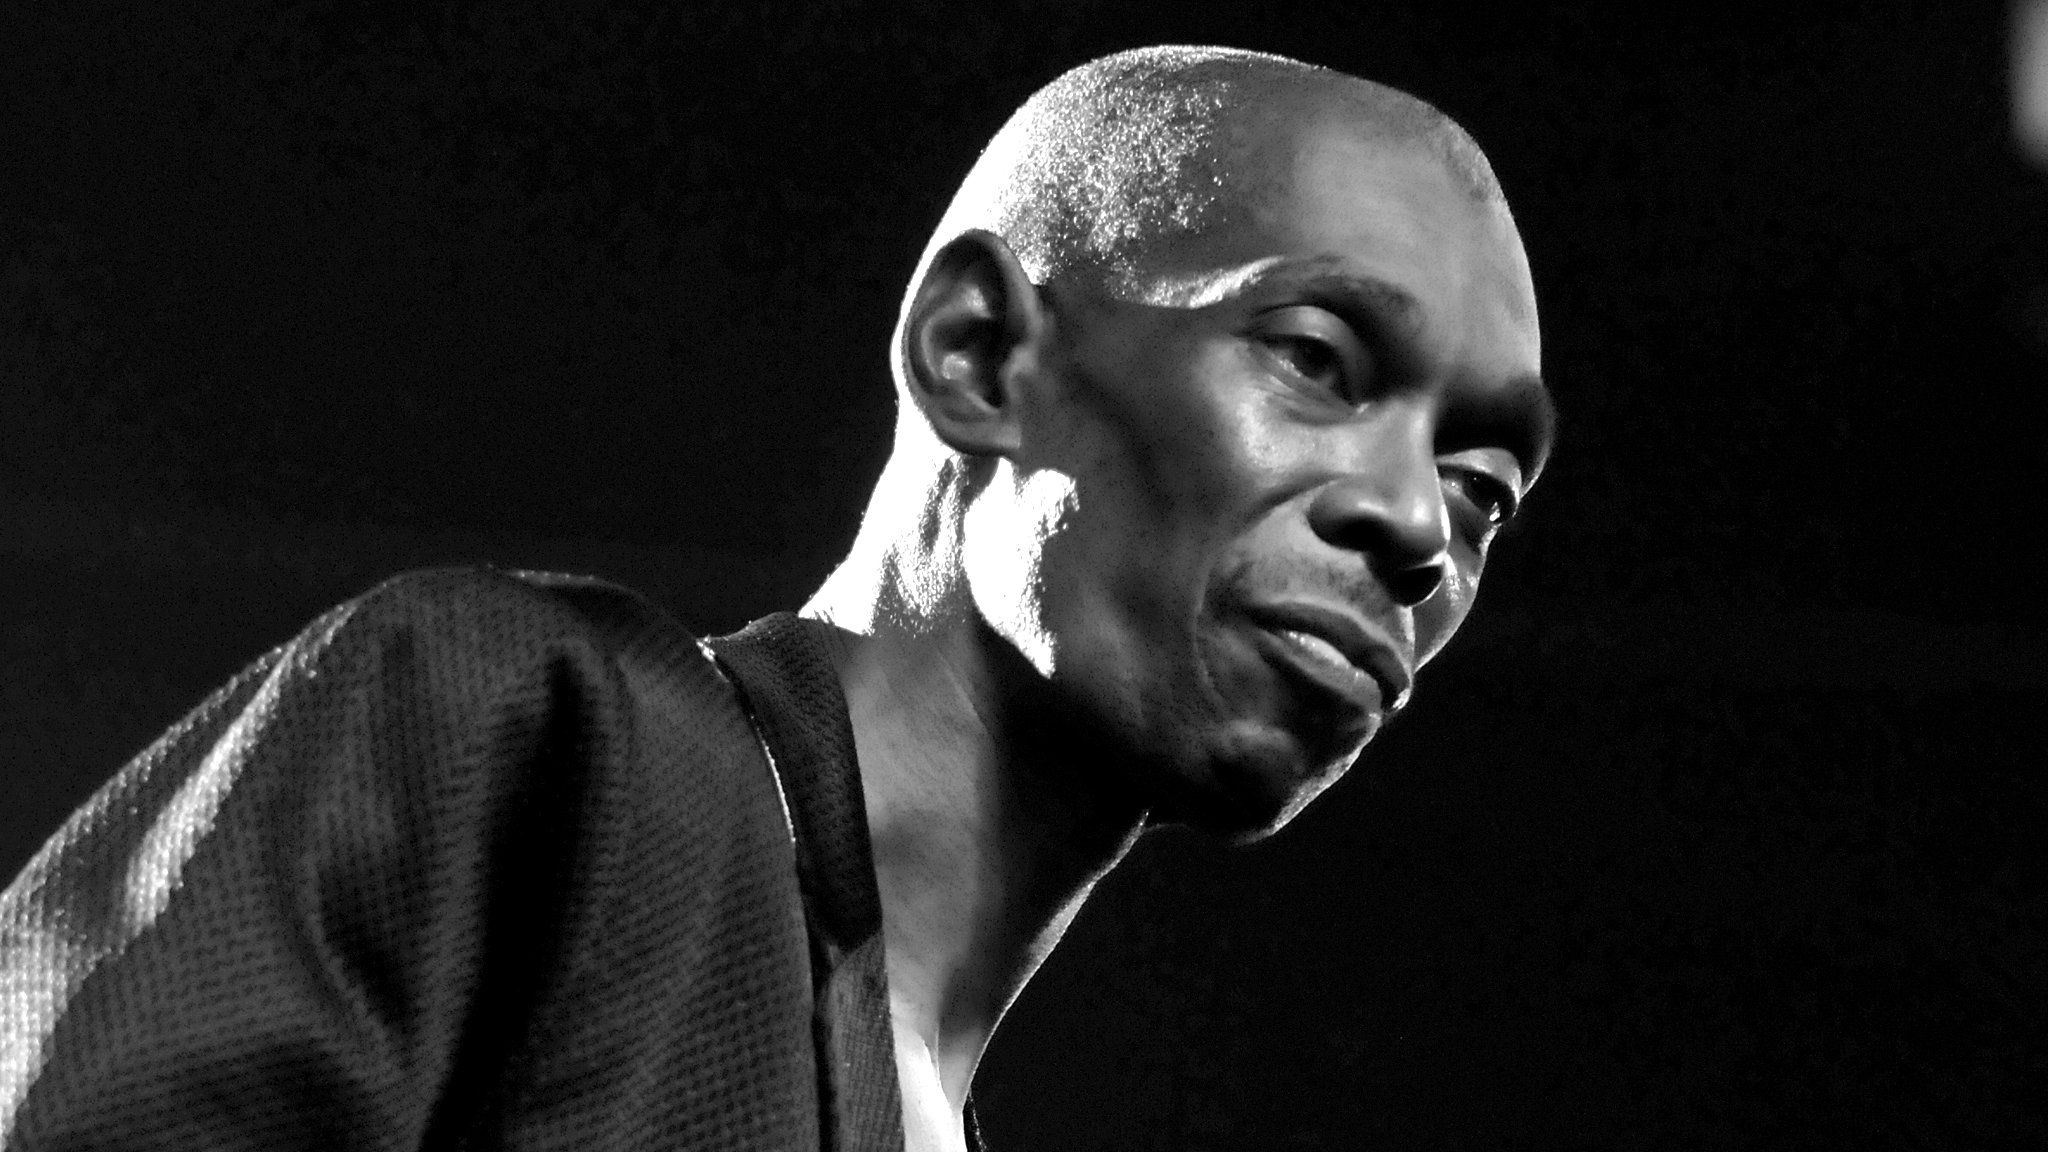 Maxi Jazz: Tributes hail Faithless singer as an 'incredible talent' - BBC News